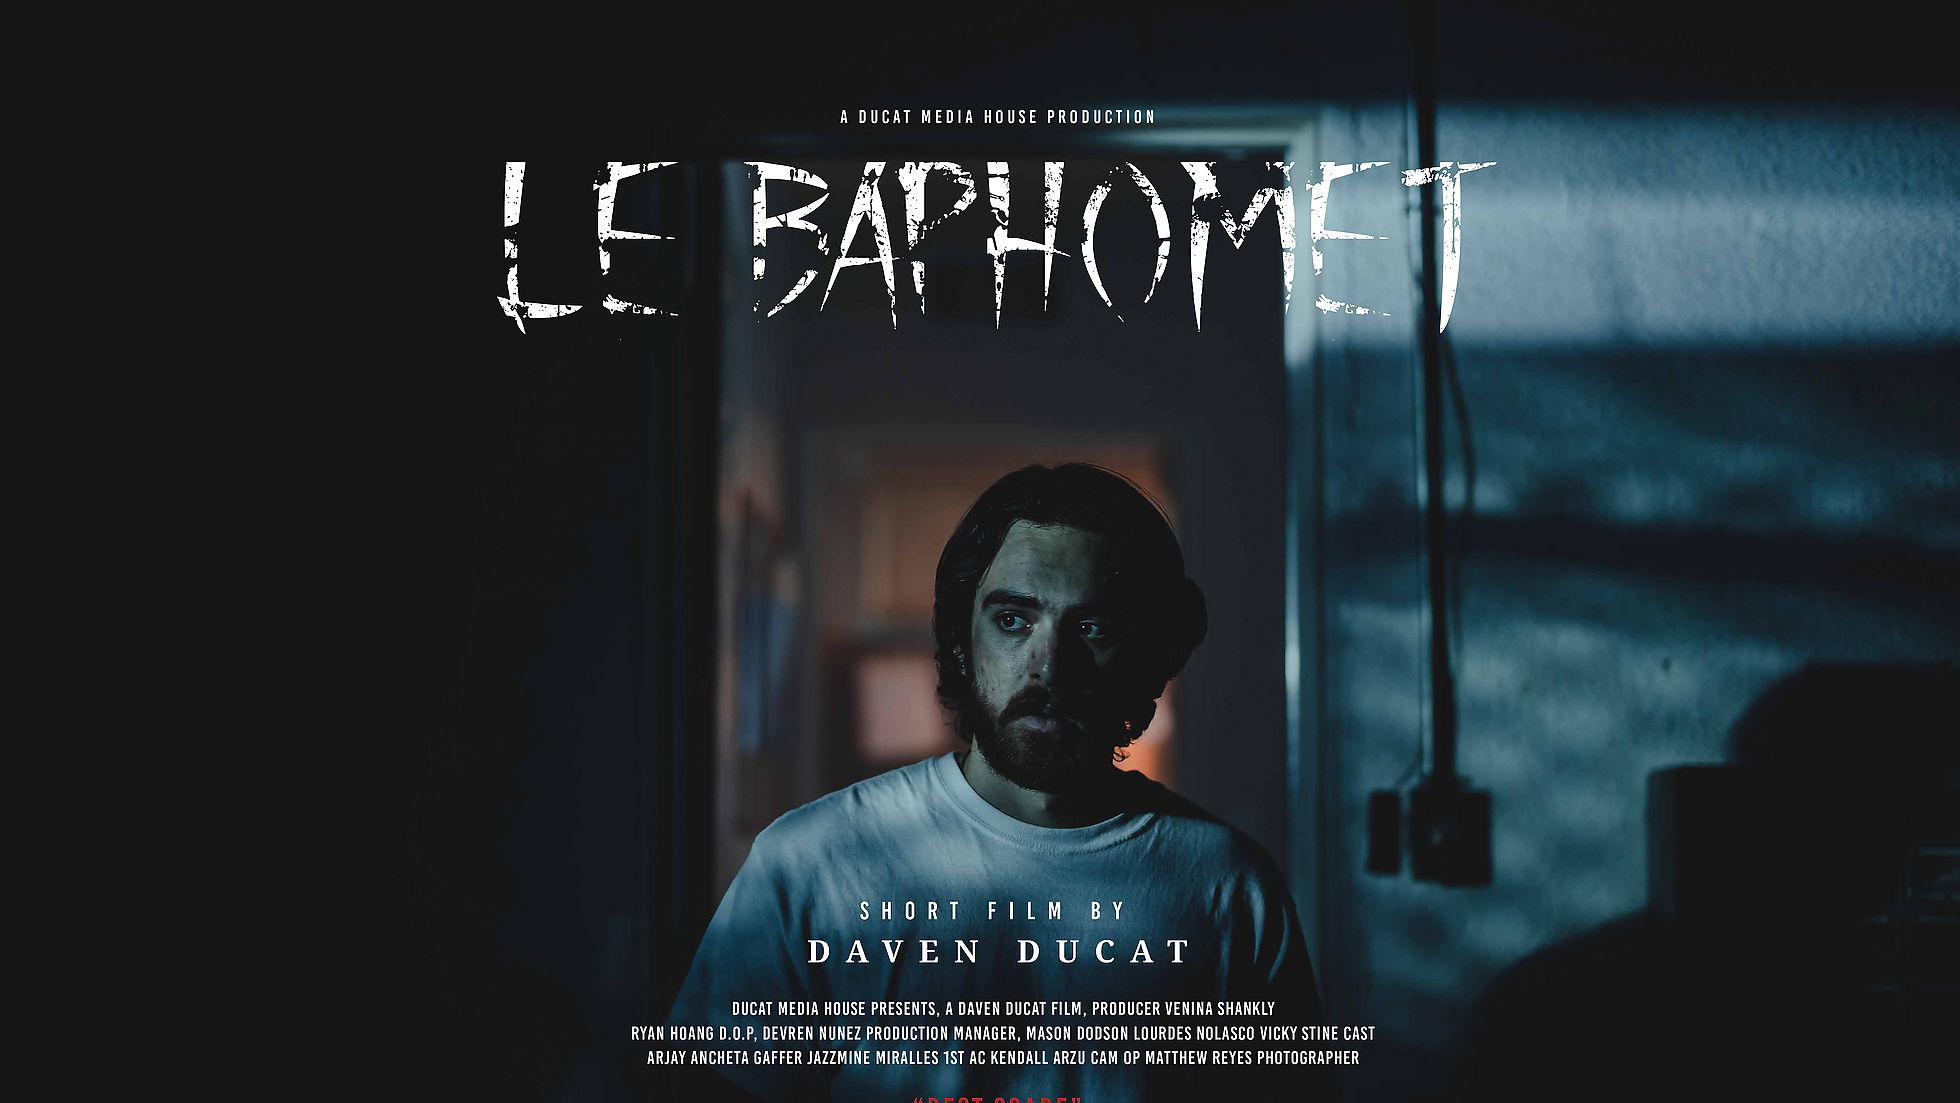 Le Baphomet | Award Winning "Best Scare"